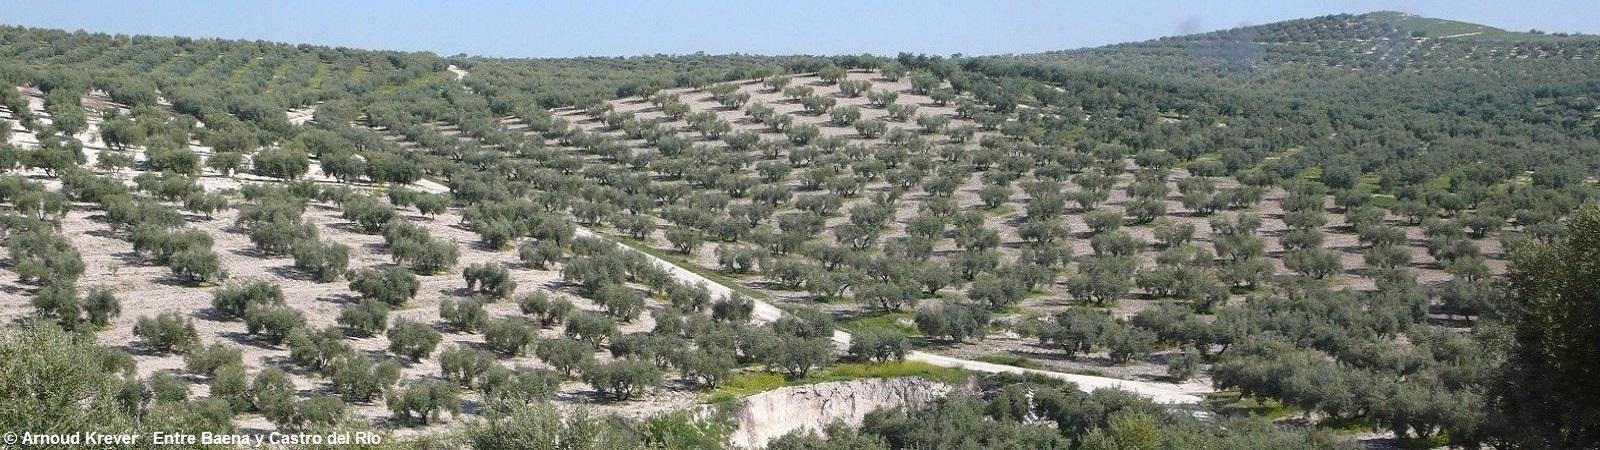 GranadaS 0351 Voorbij Baena, eindeloze olijfboomplantages